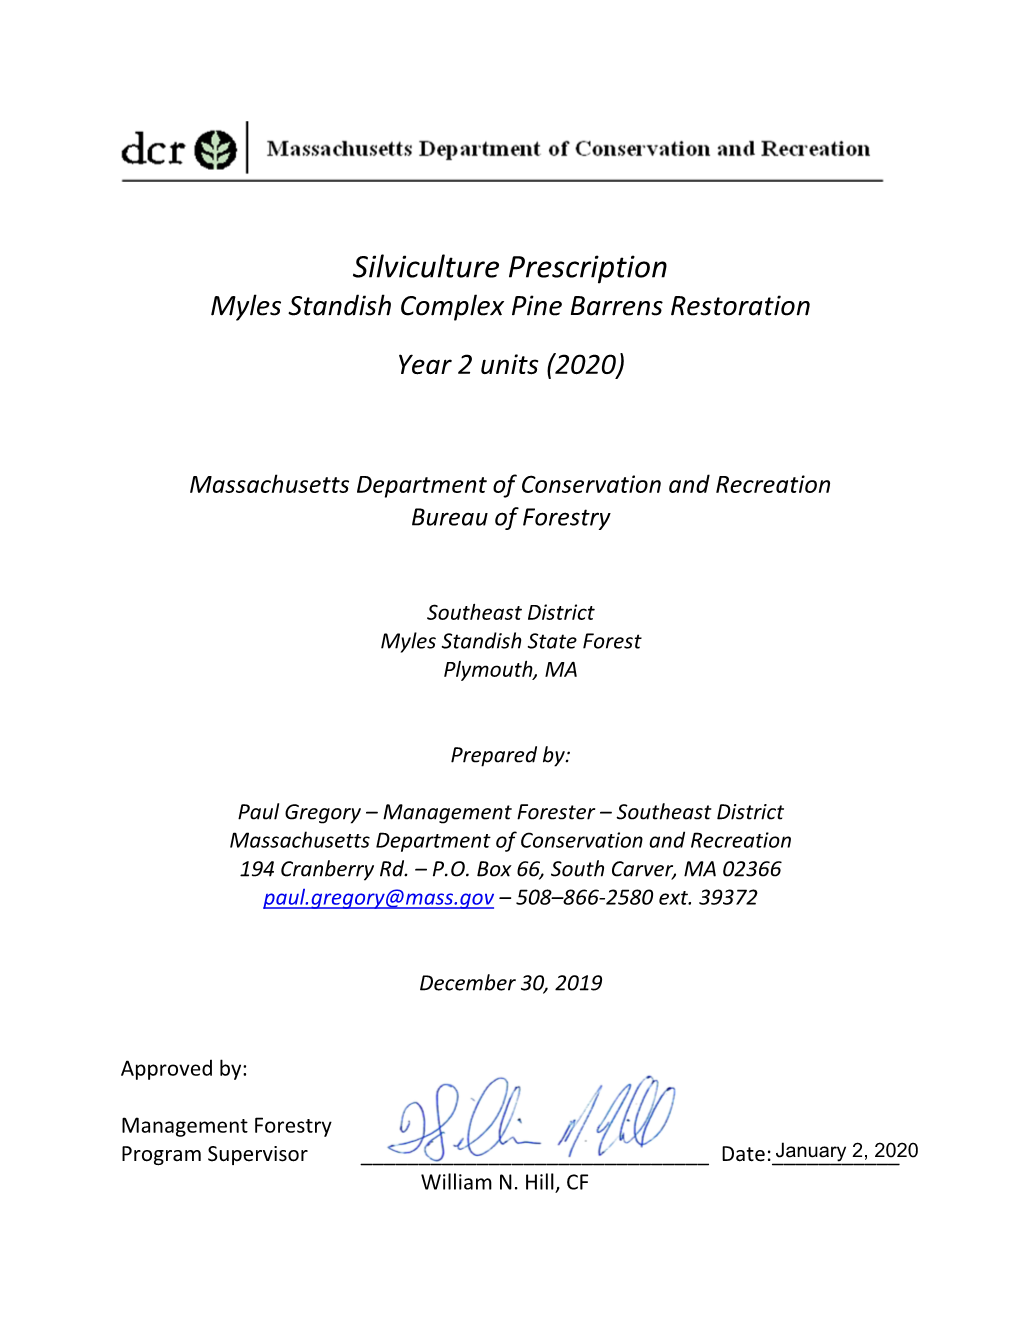 MSSF Restoration Silvicultural Prescription Year 2 Units